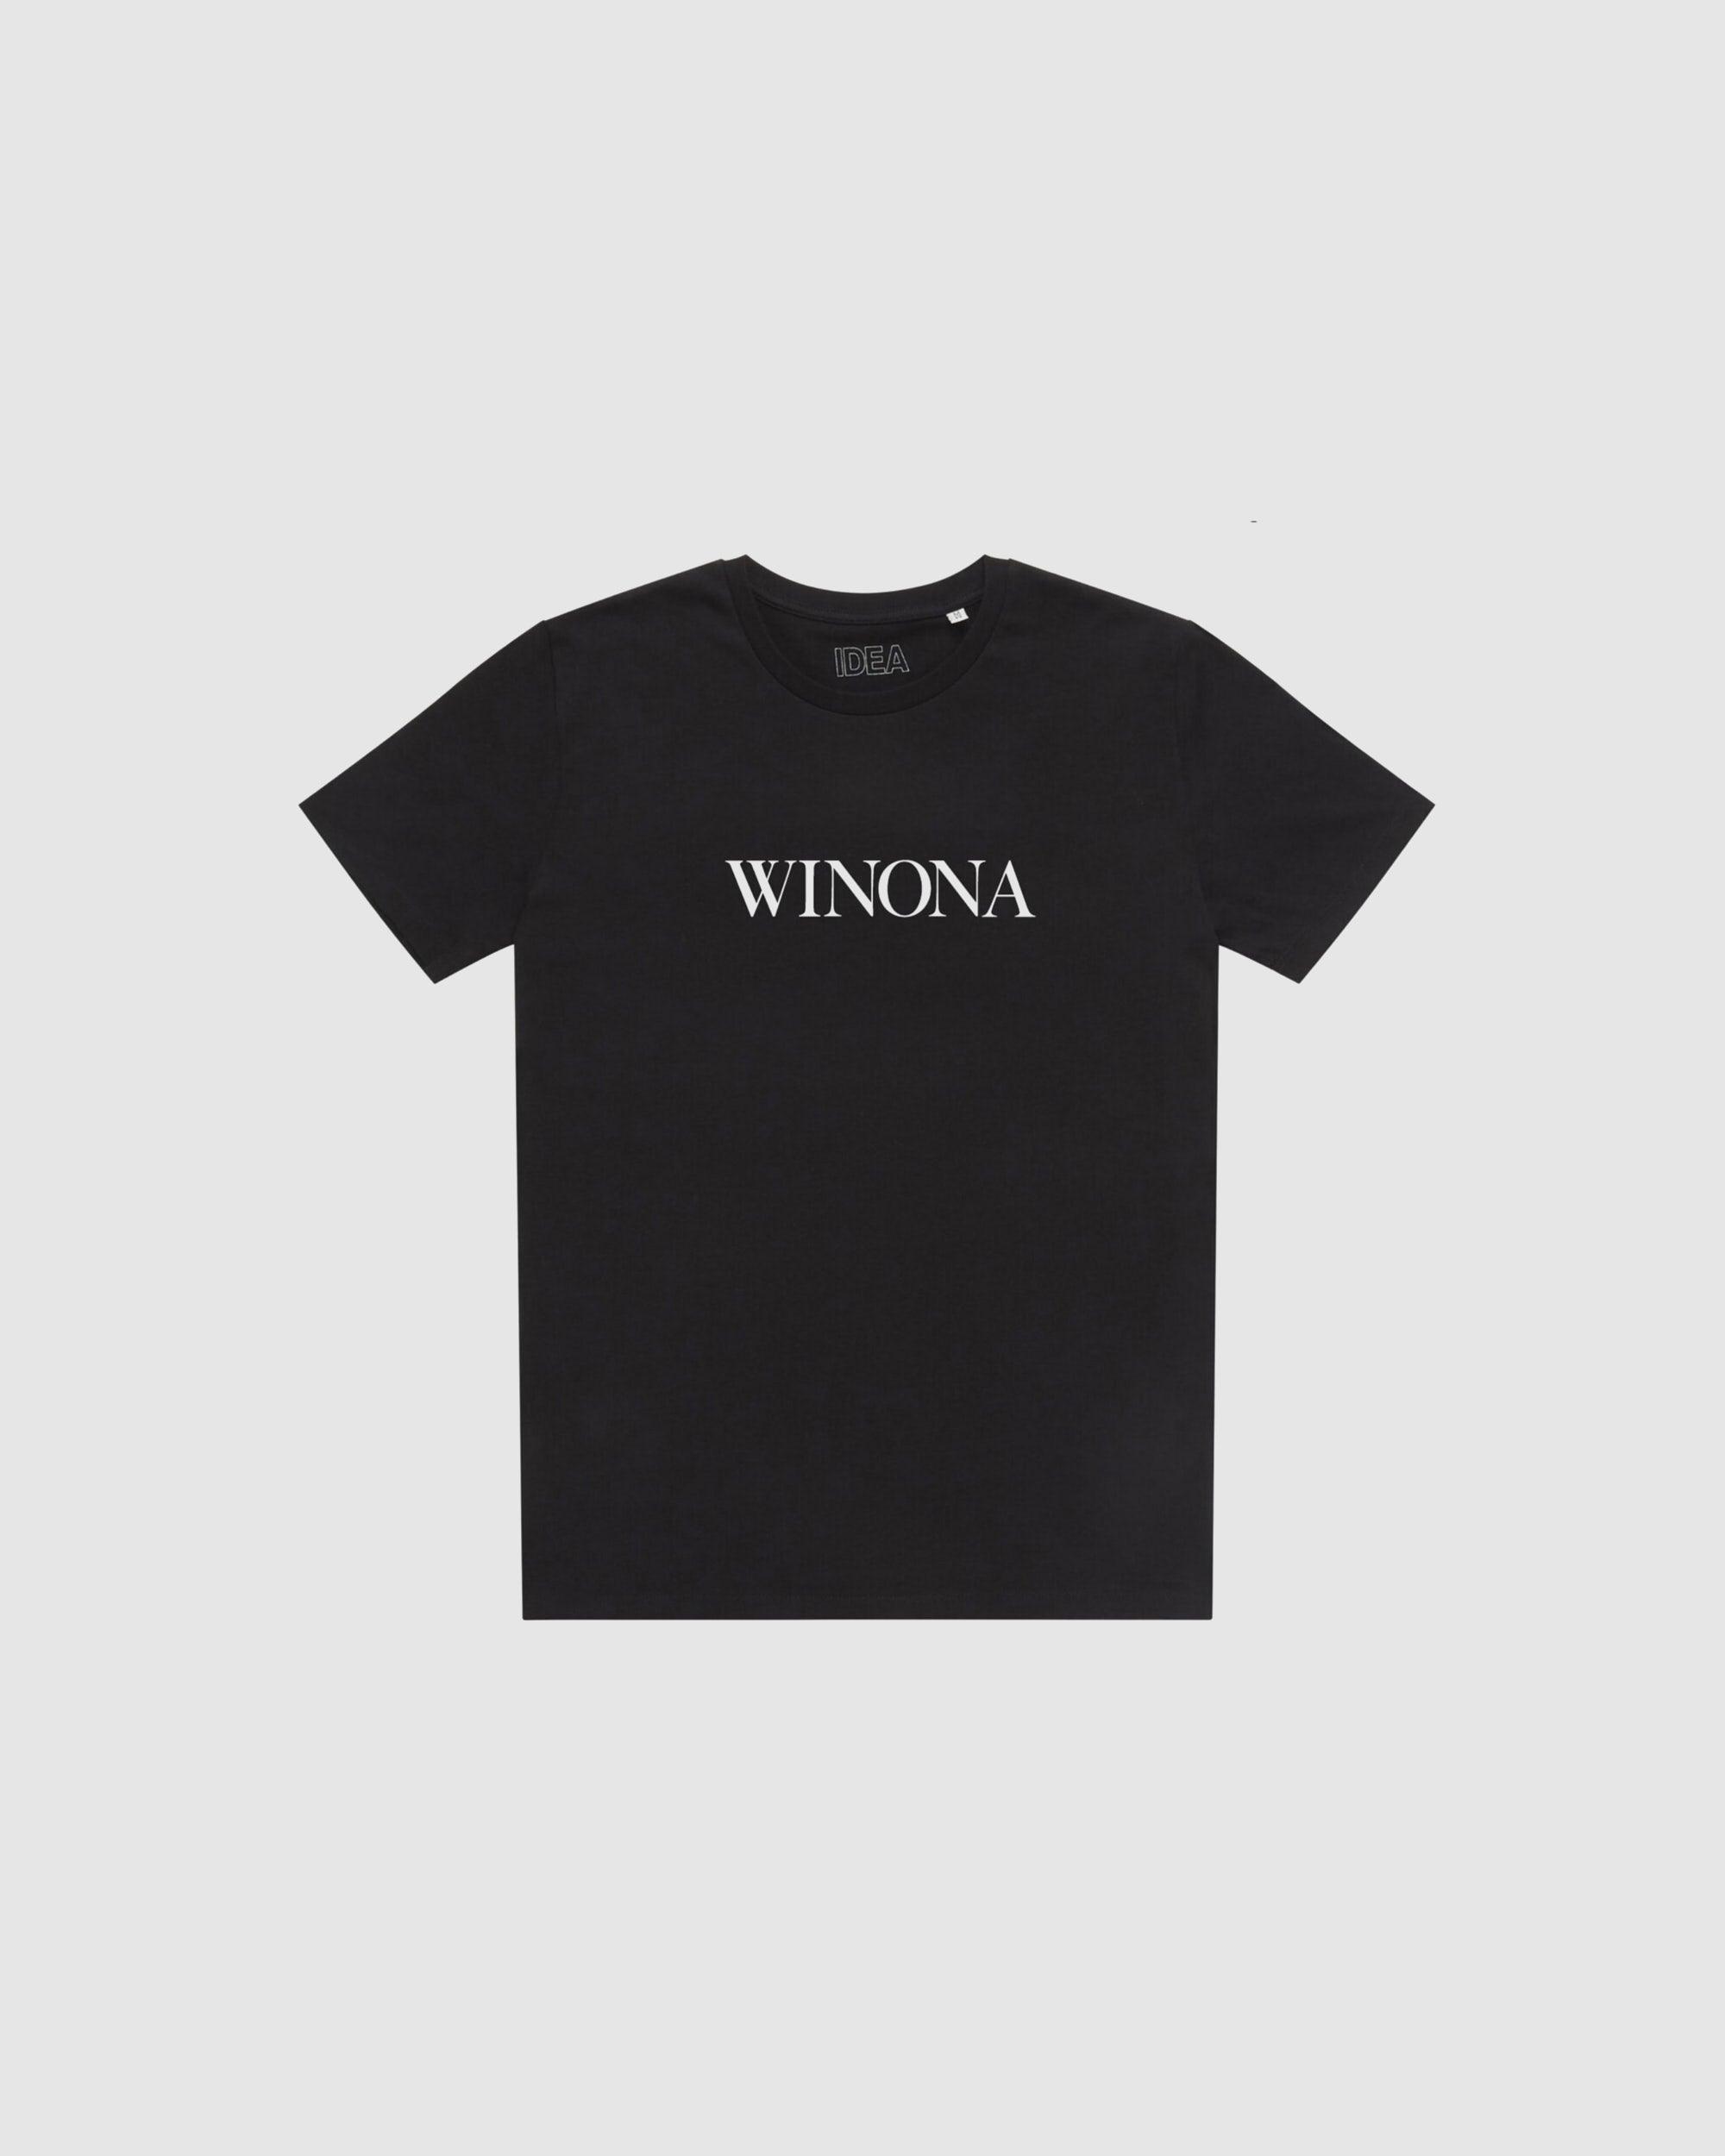 IDEA Winona T-Shirt Black – Chinatown Country Club